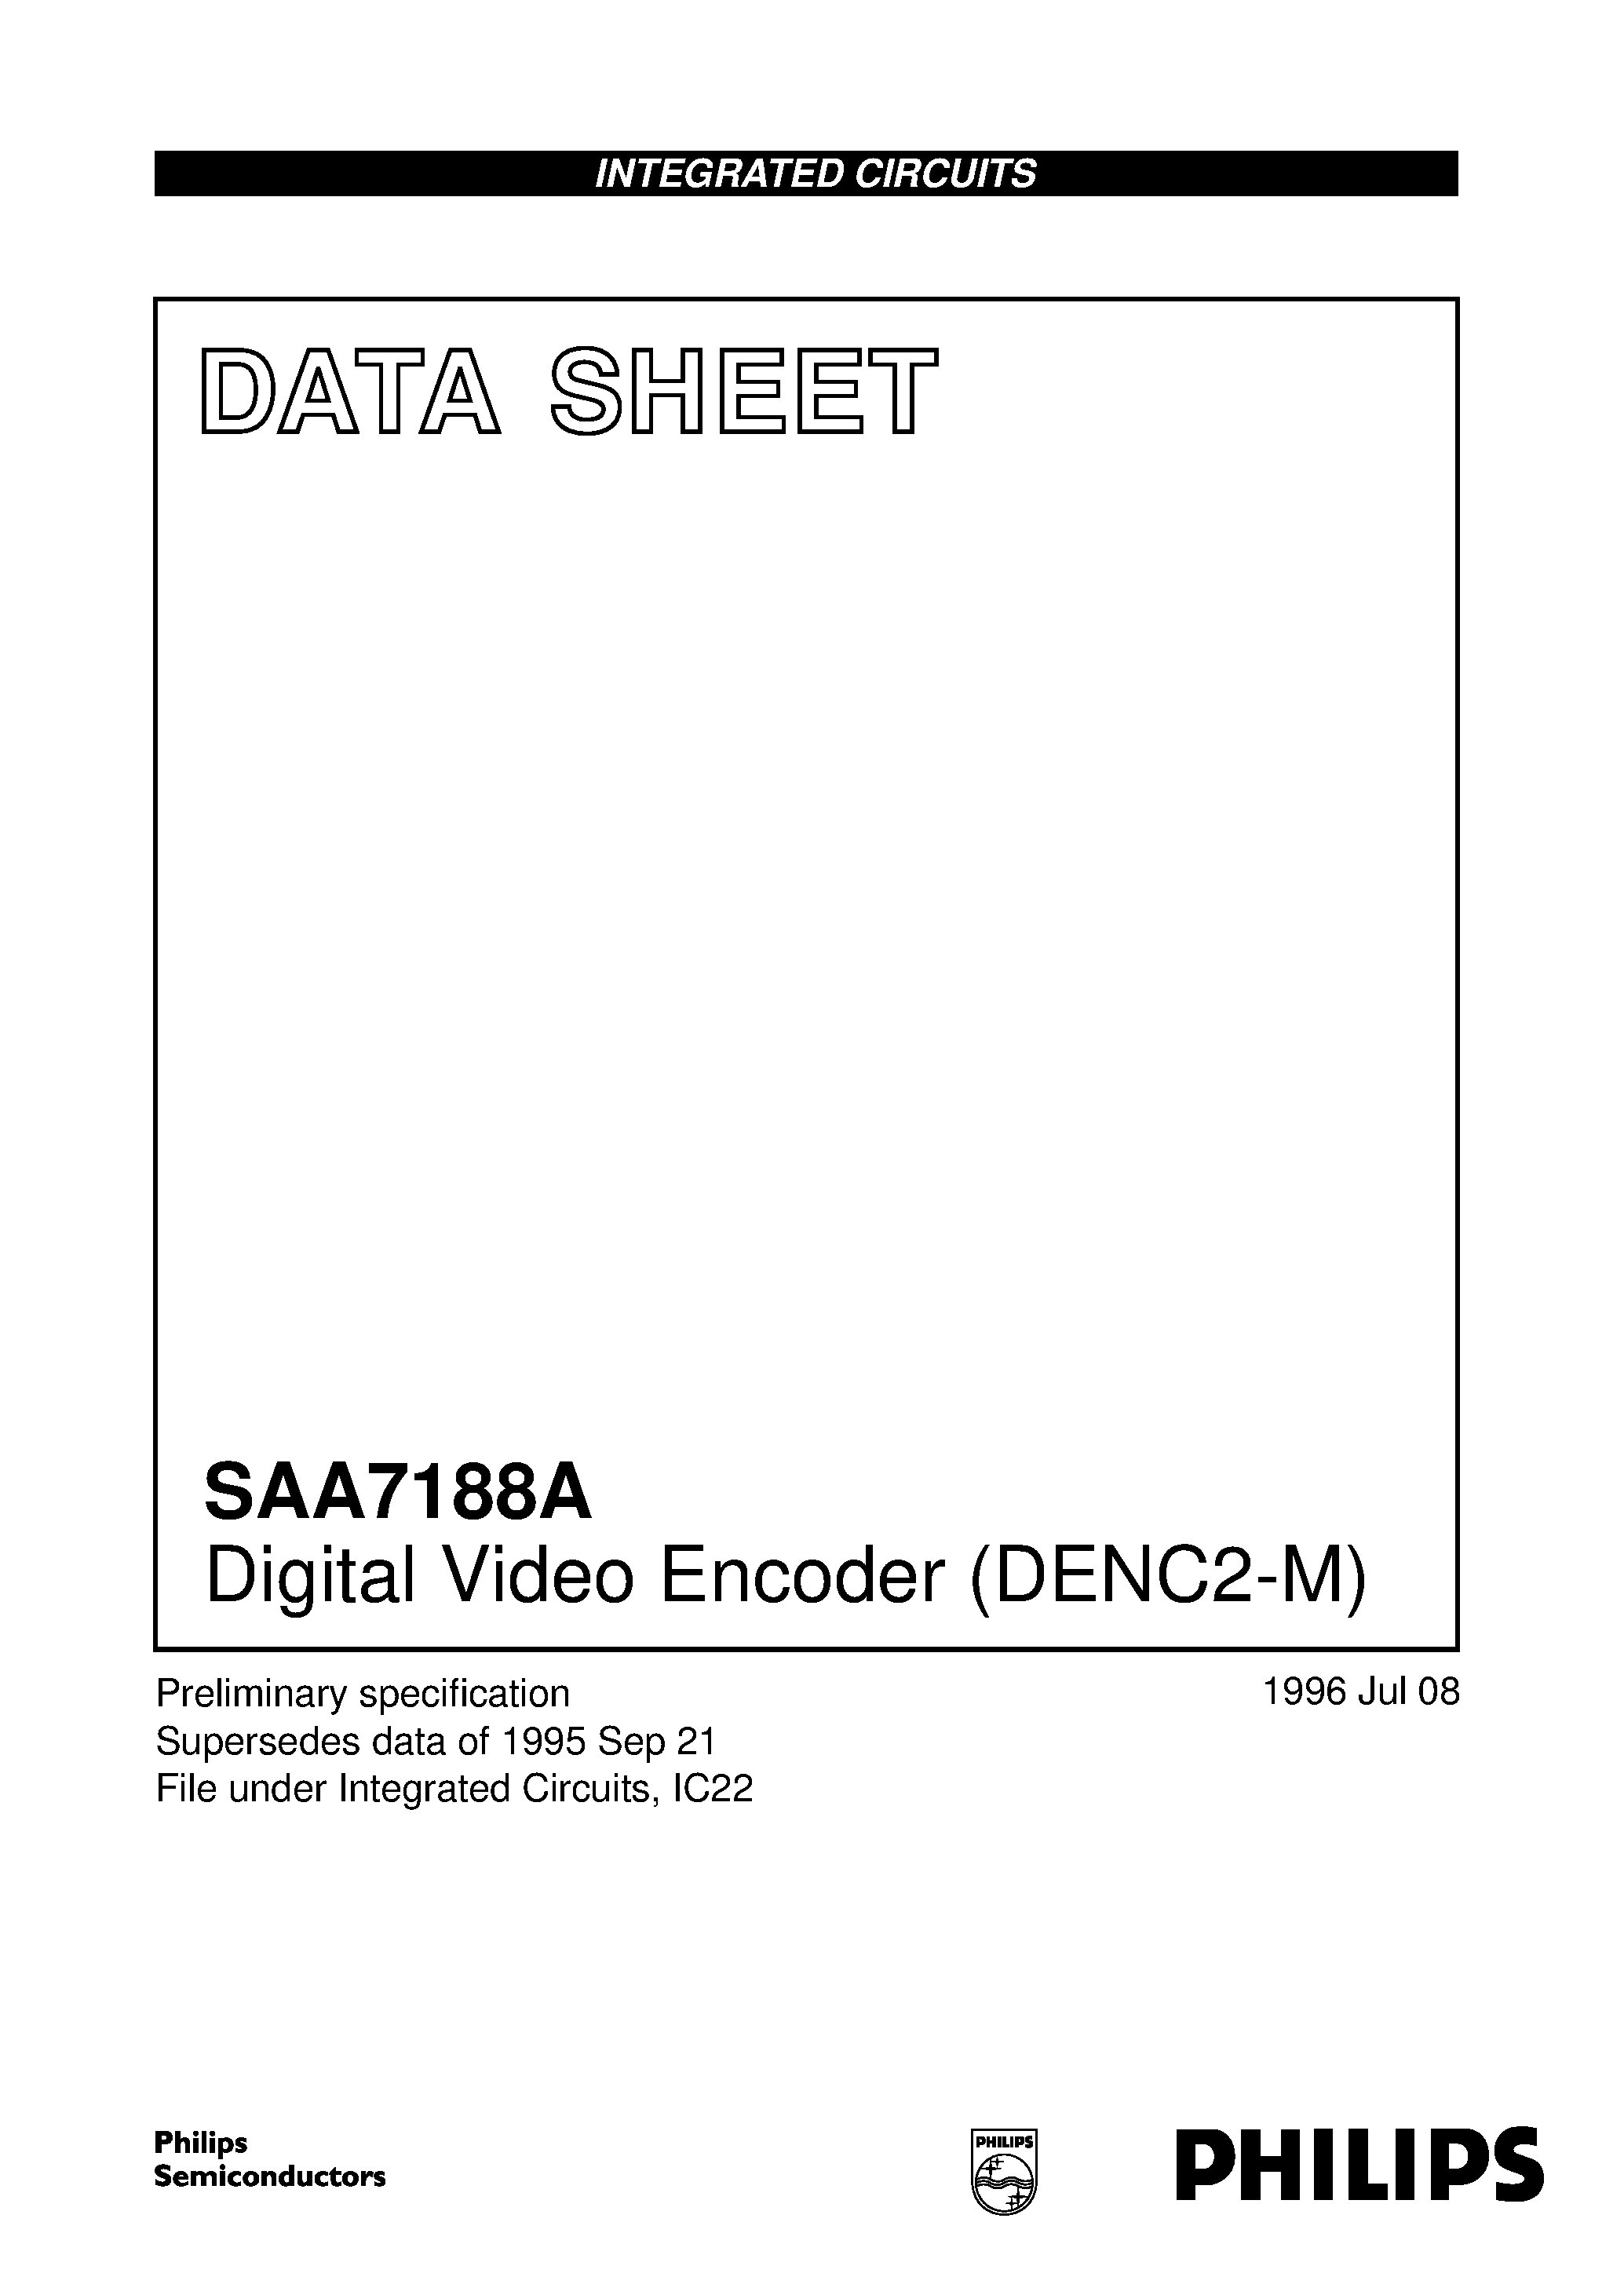 Даташит SAA7188AWP - Digital Video Encoder DENC2-M страница 1